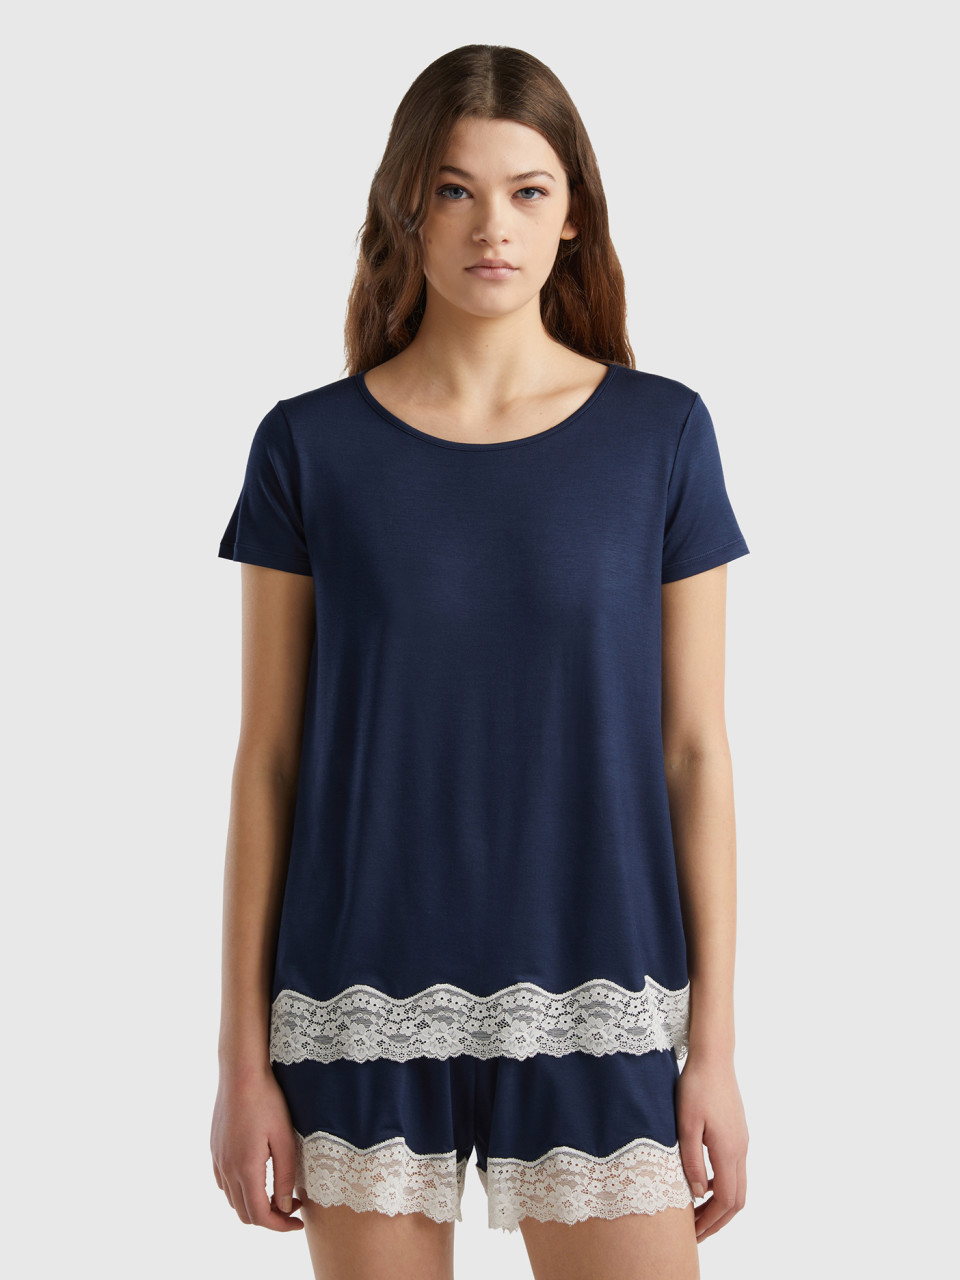 Benetton, Short Sleeve T-shirts With Lace, Dark Blue, Women